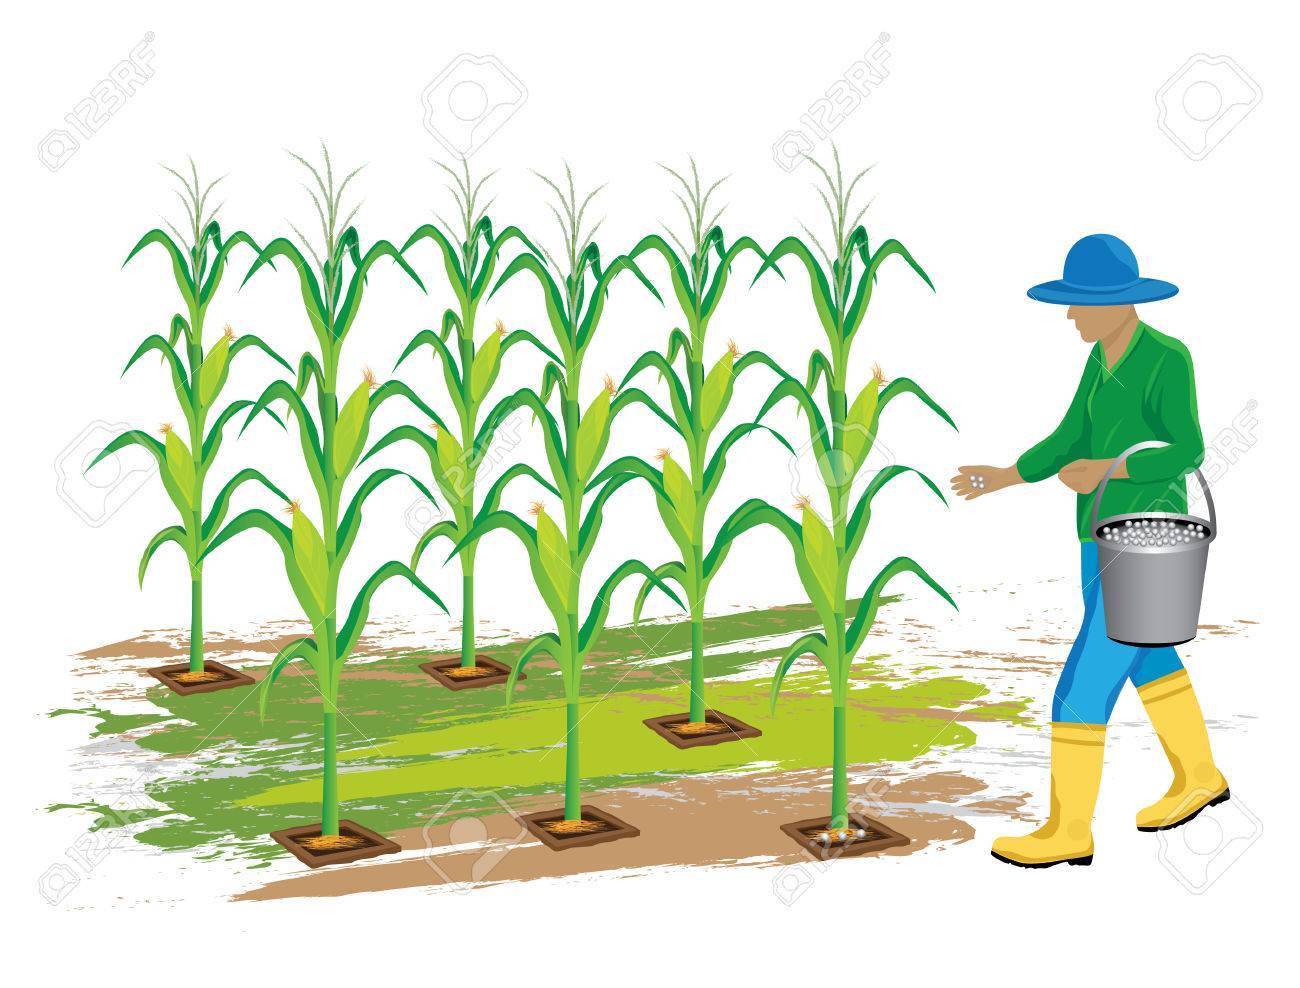 Corn crop clipart